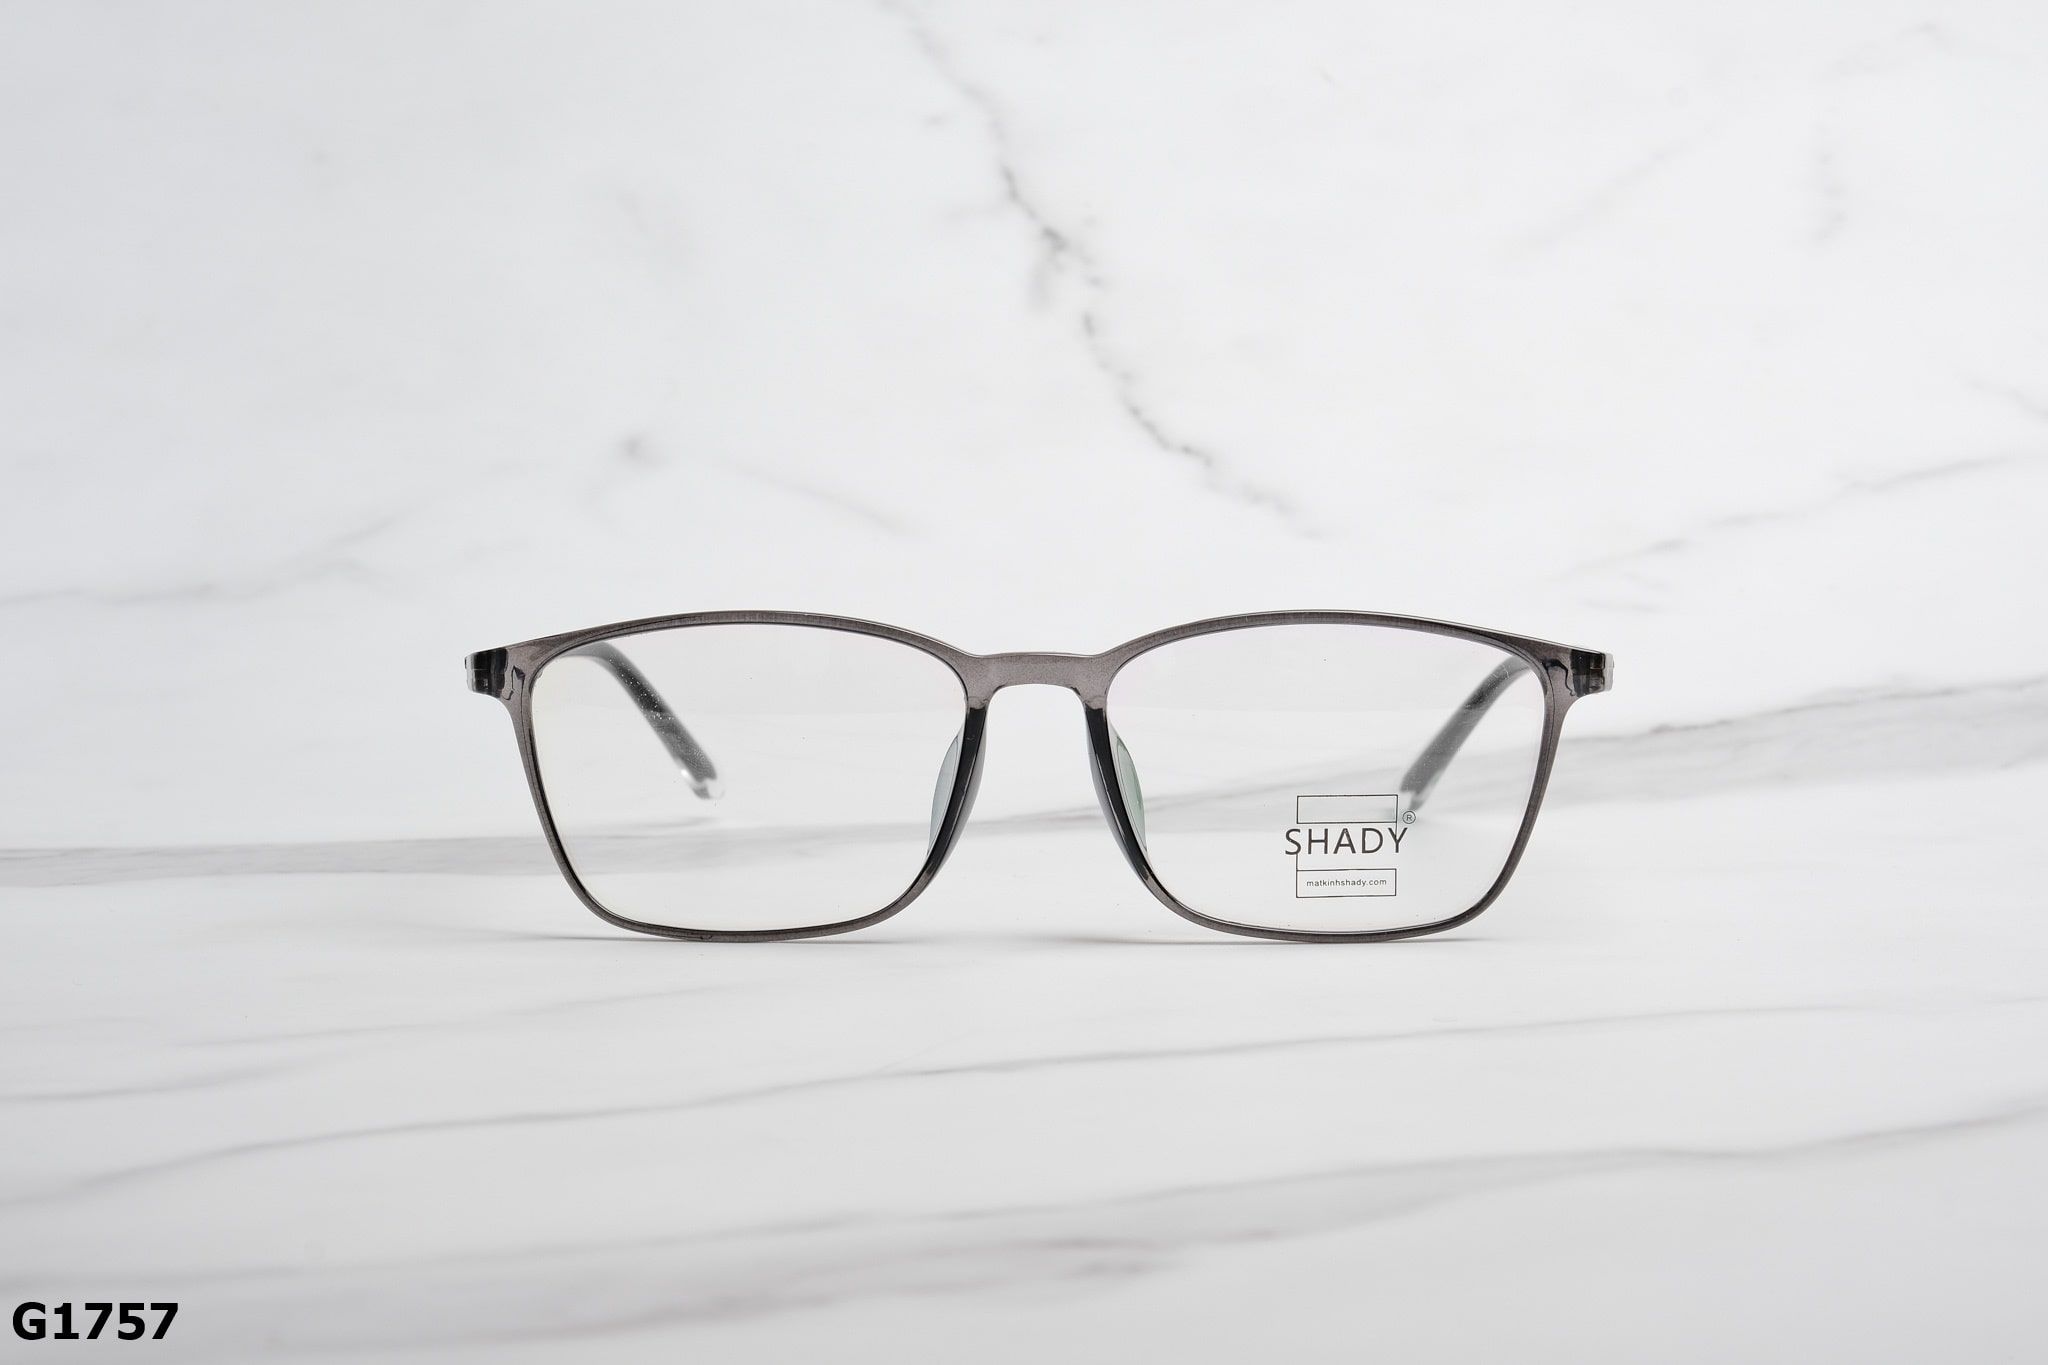  SHADY Eyewear - Glasses - G1757 